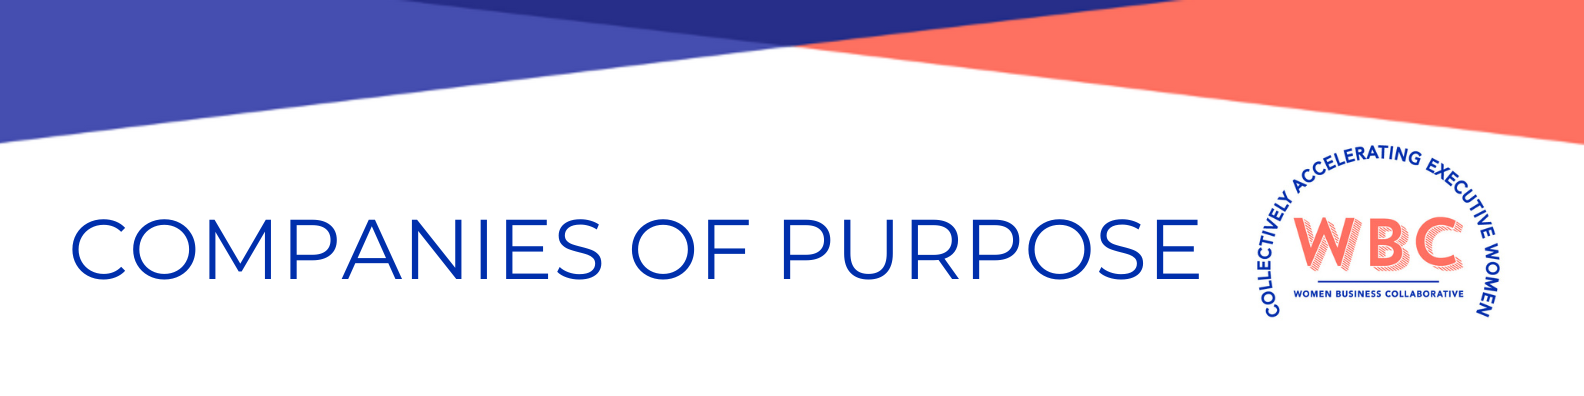 Companies of Purpose Banner 3